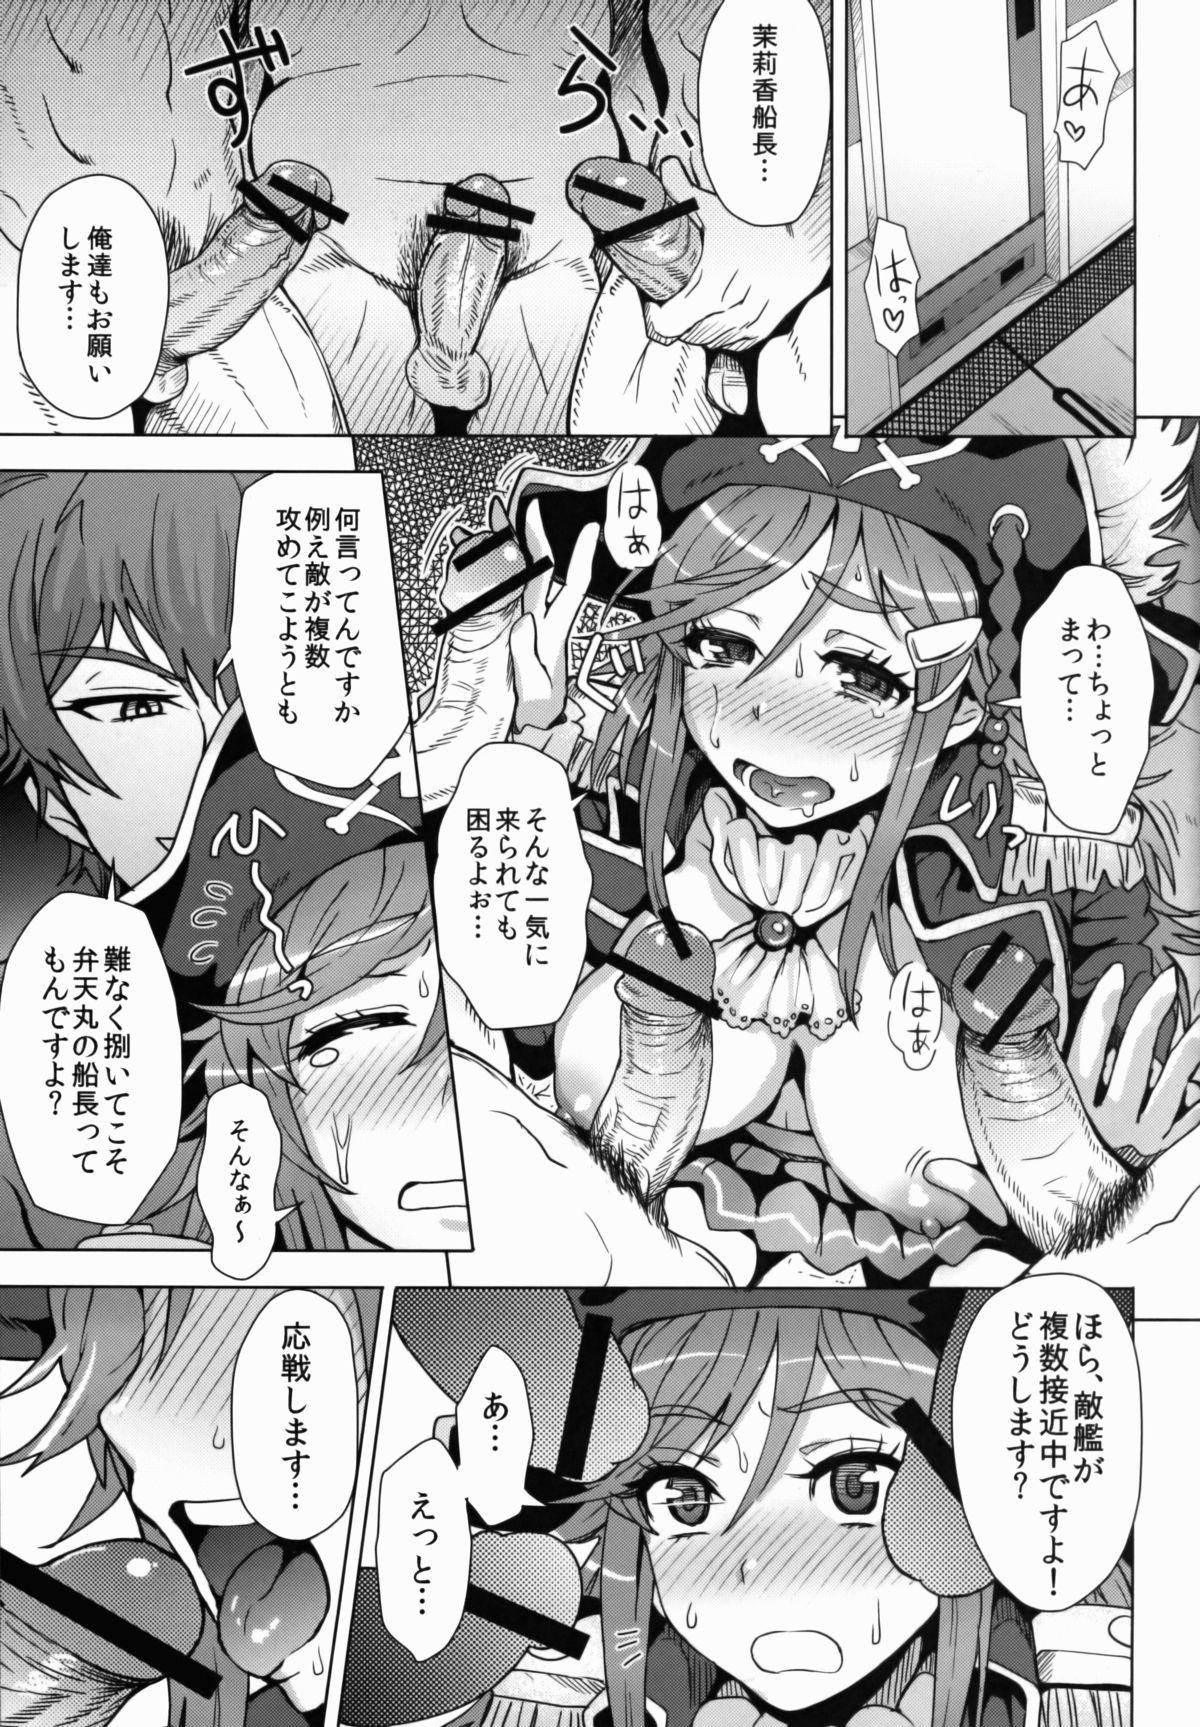 Eating CHIAKIchang★HELP!! - Mouretsu pirates Mofos - Page 6